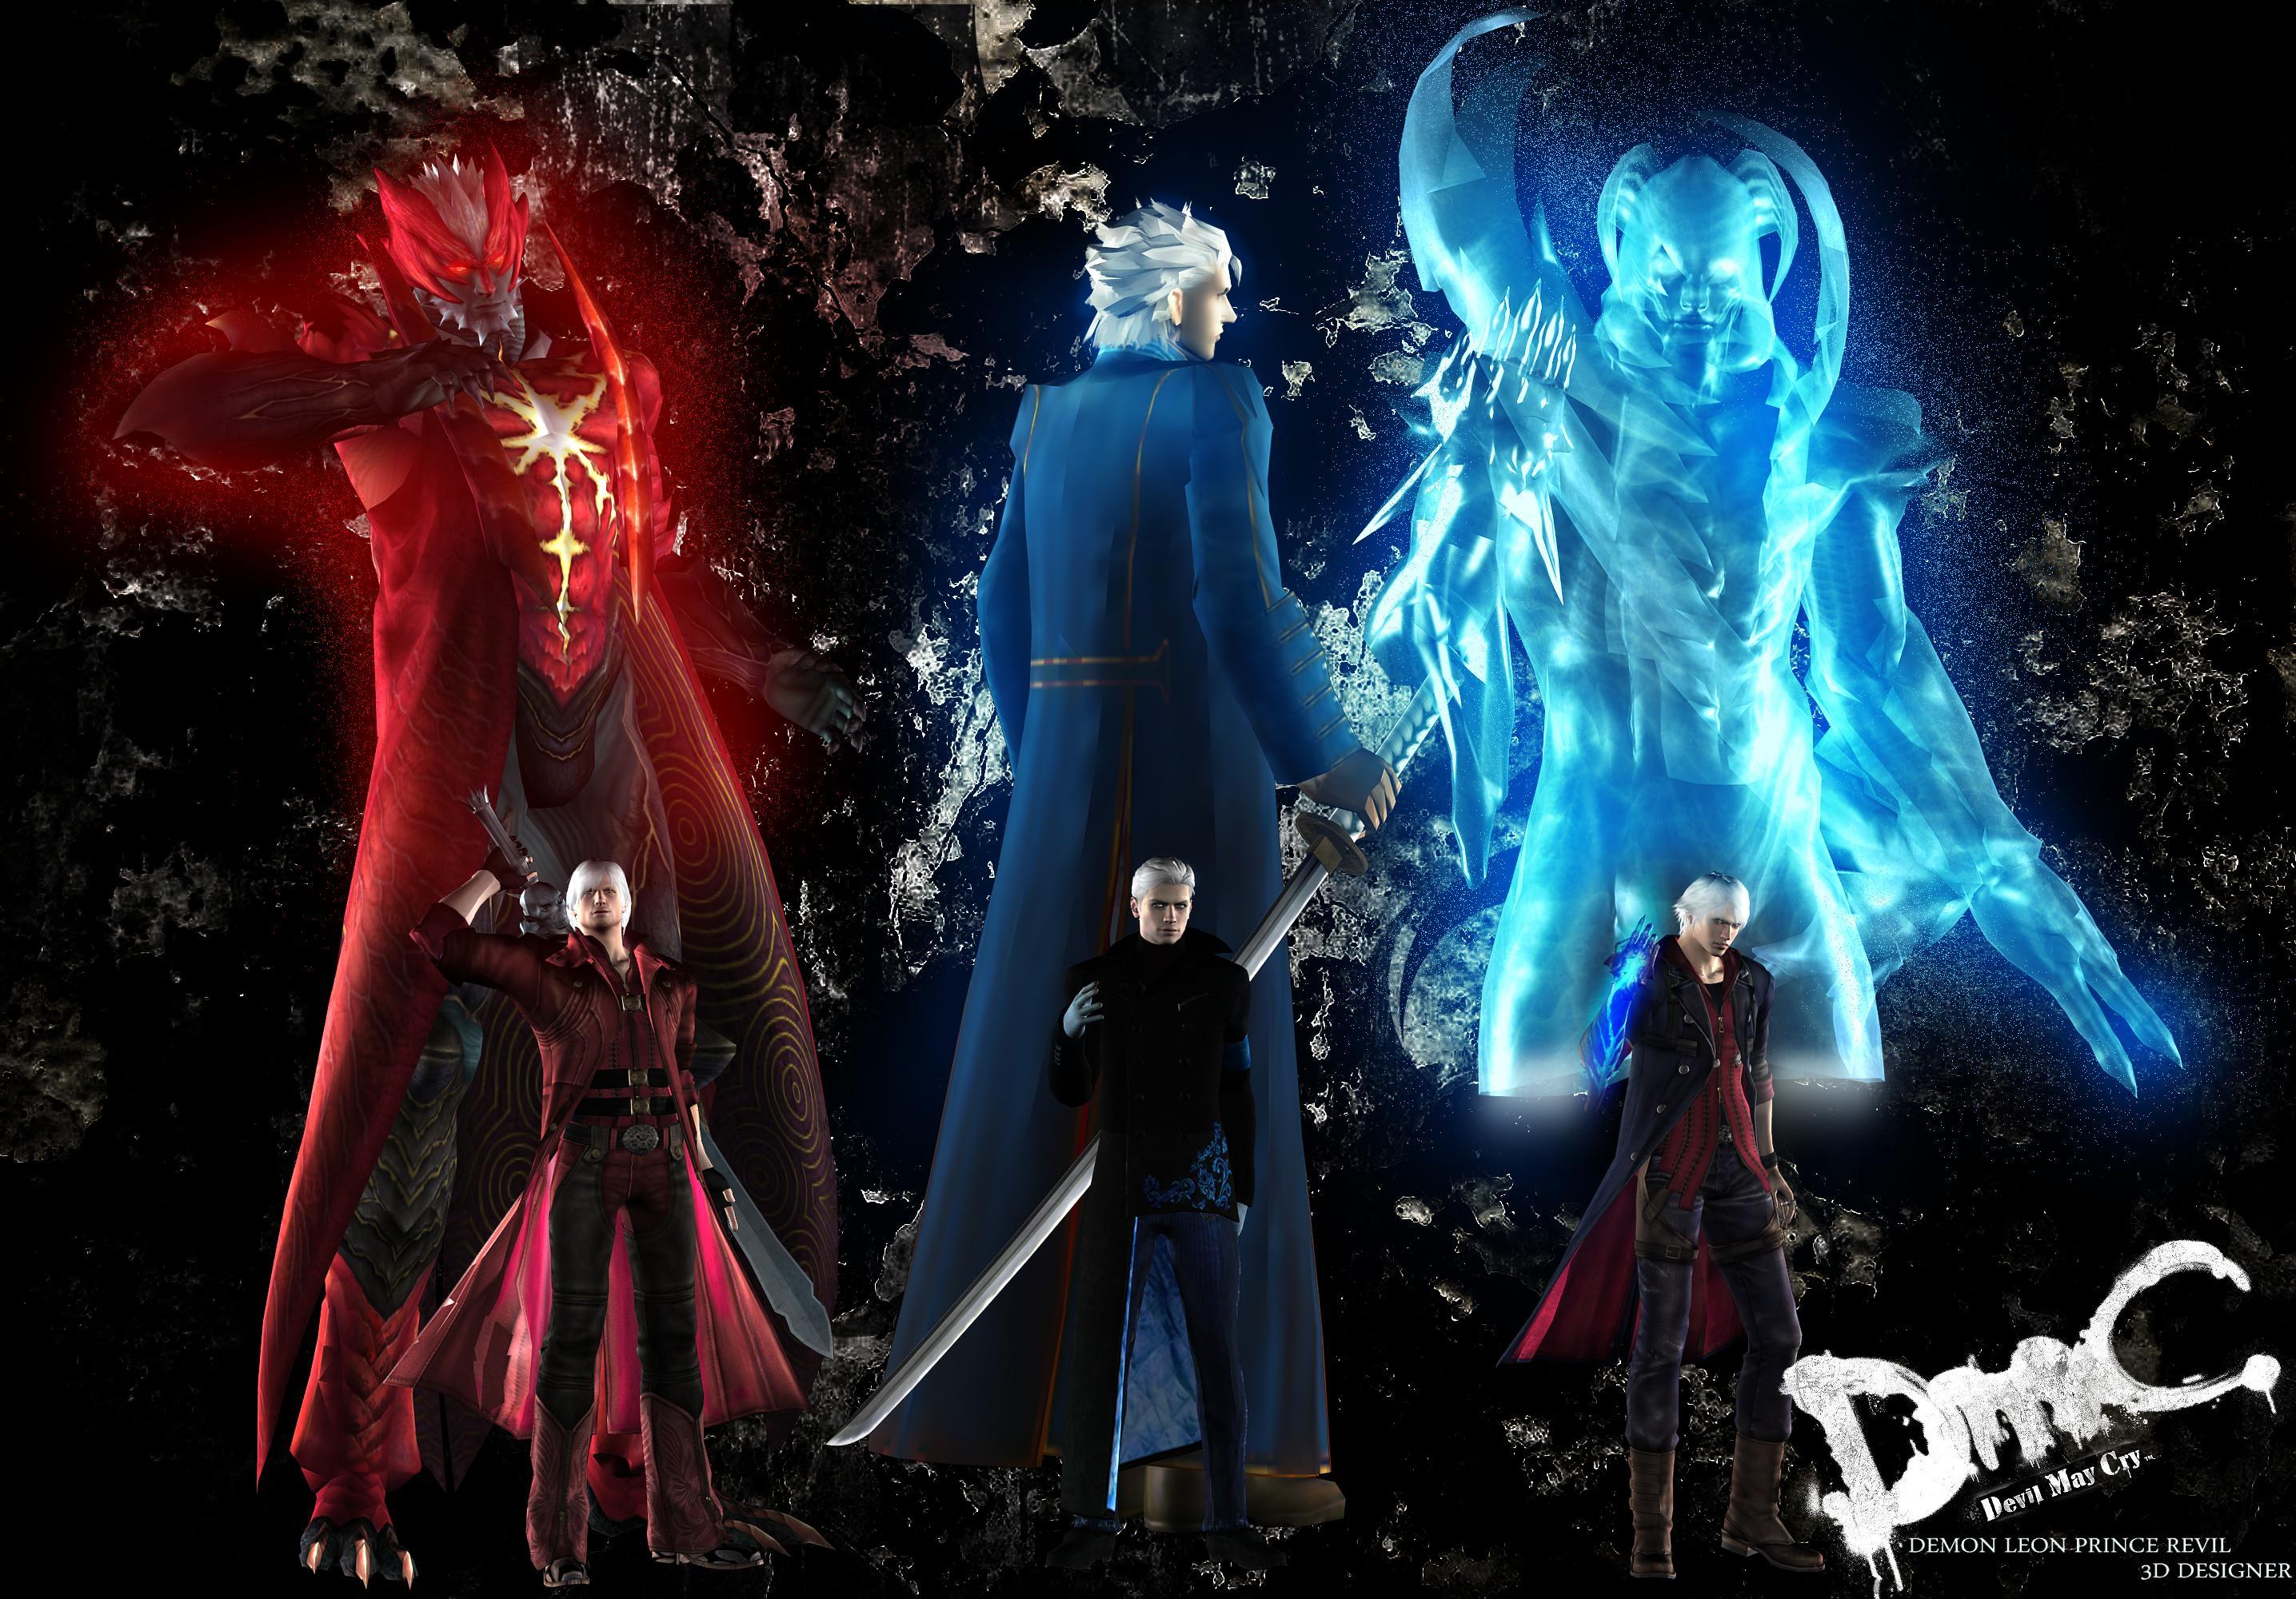 The Disturbed Devil 3D Effect by jin05 on DeviantArt